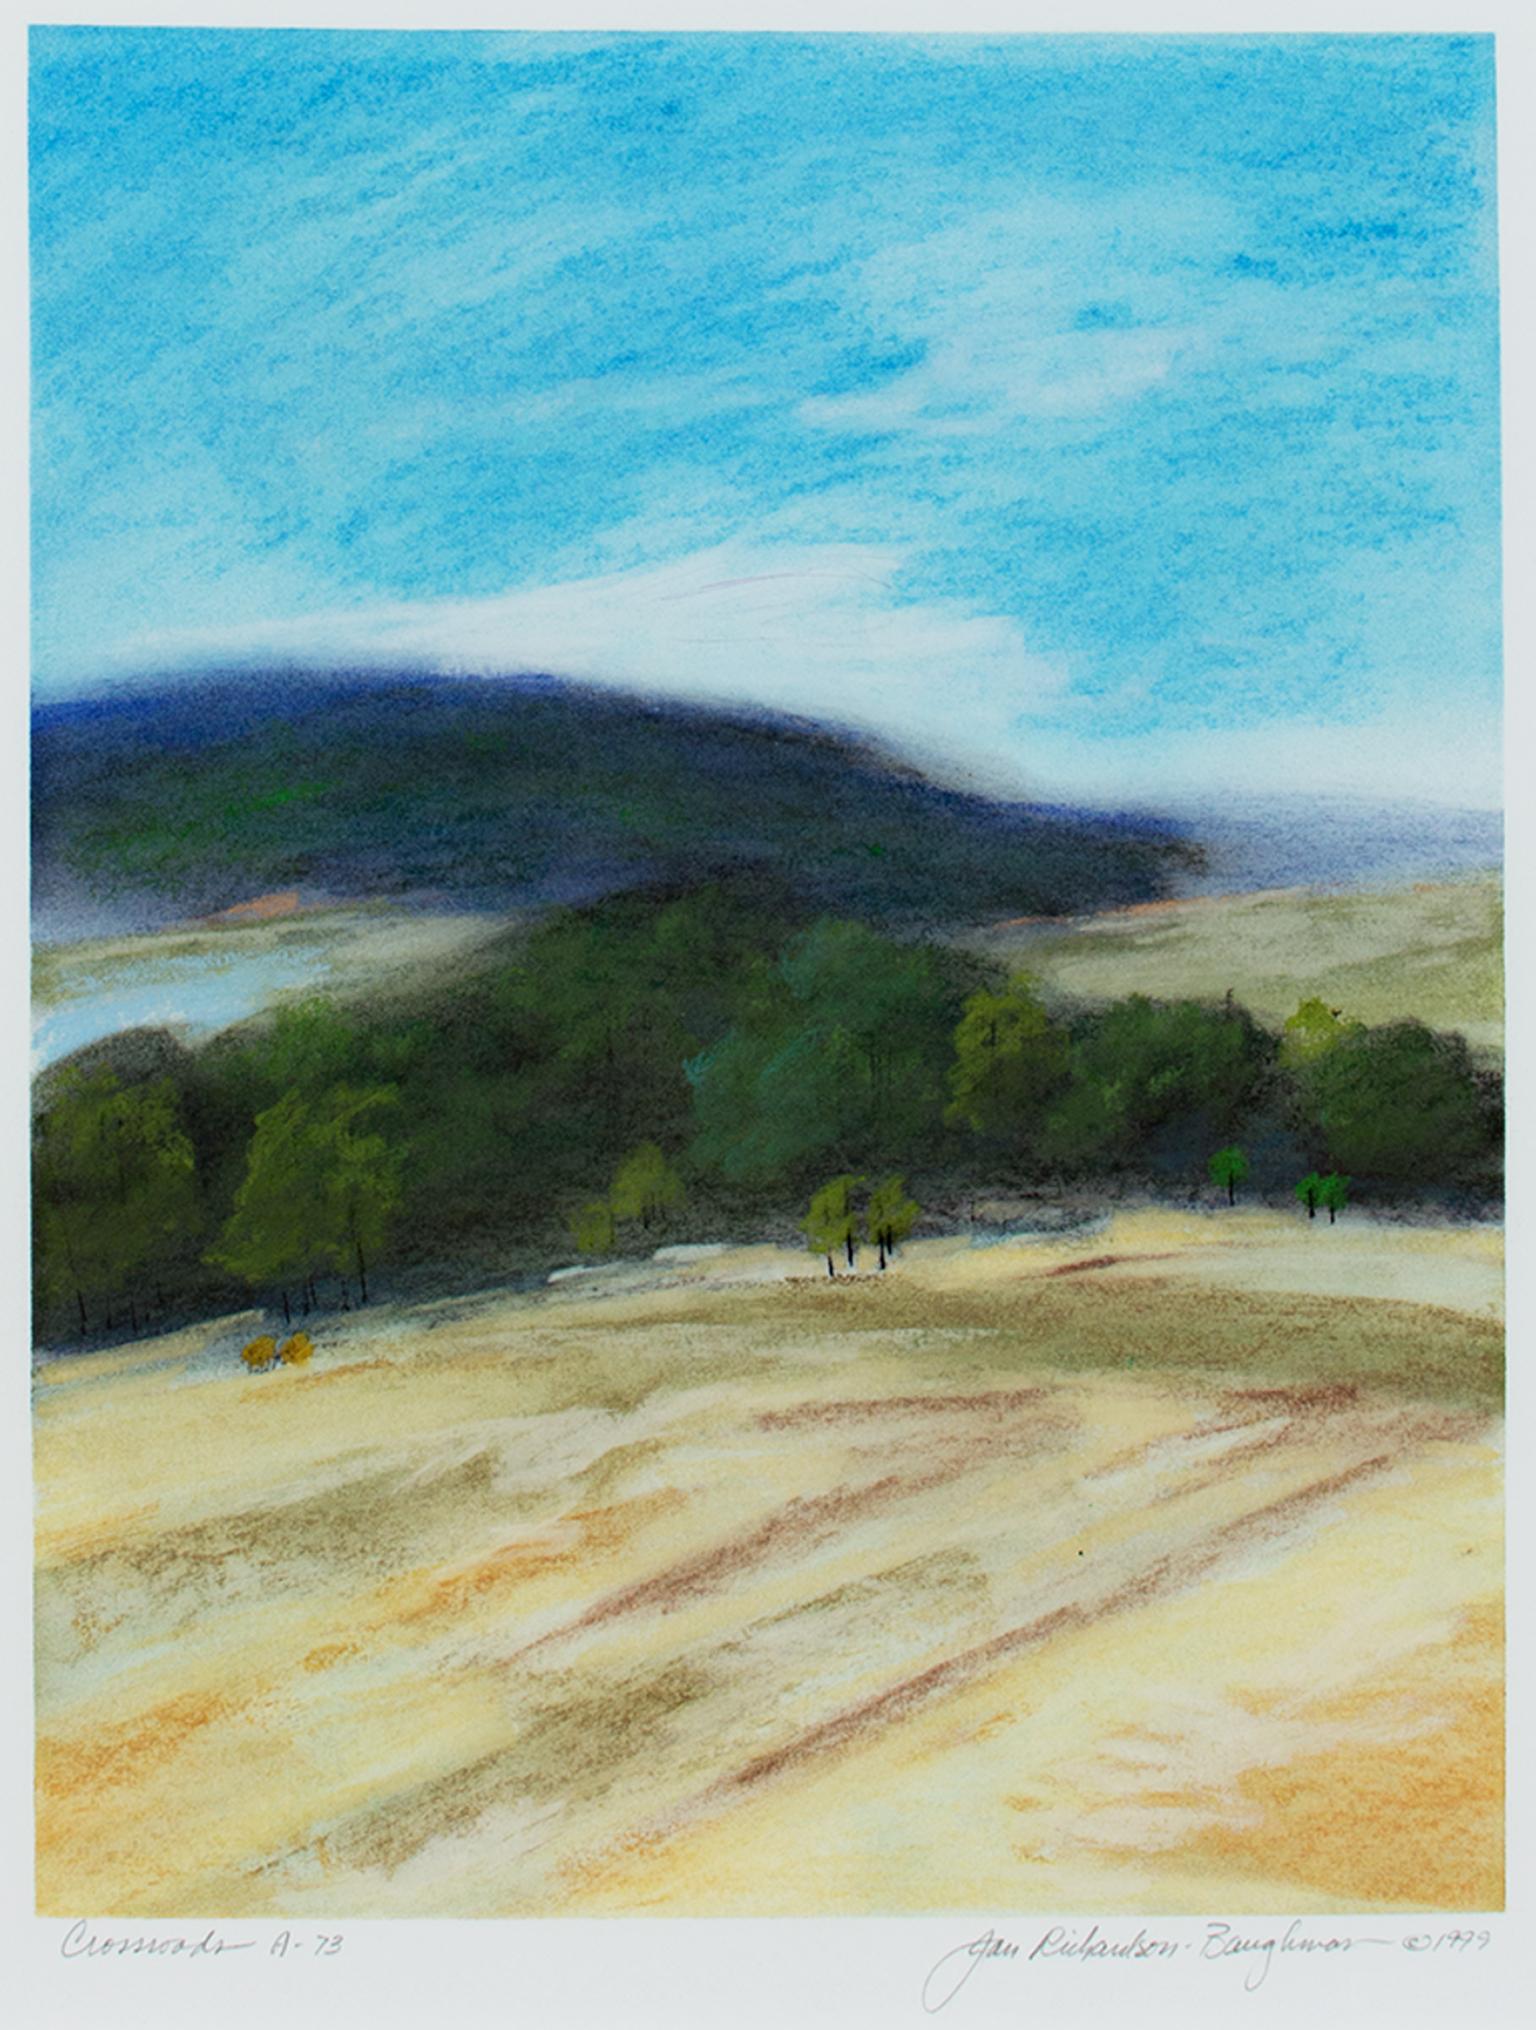 Janet Richardson-Baughman Landscape Art - "Crossroads A-73, " Hazy Pastel Landscape signed by Jan Richardson-Baughman